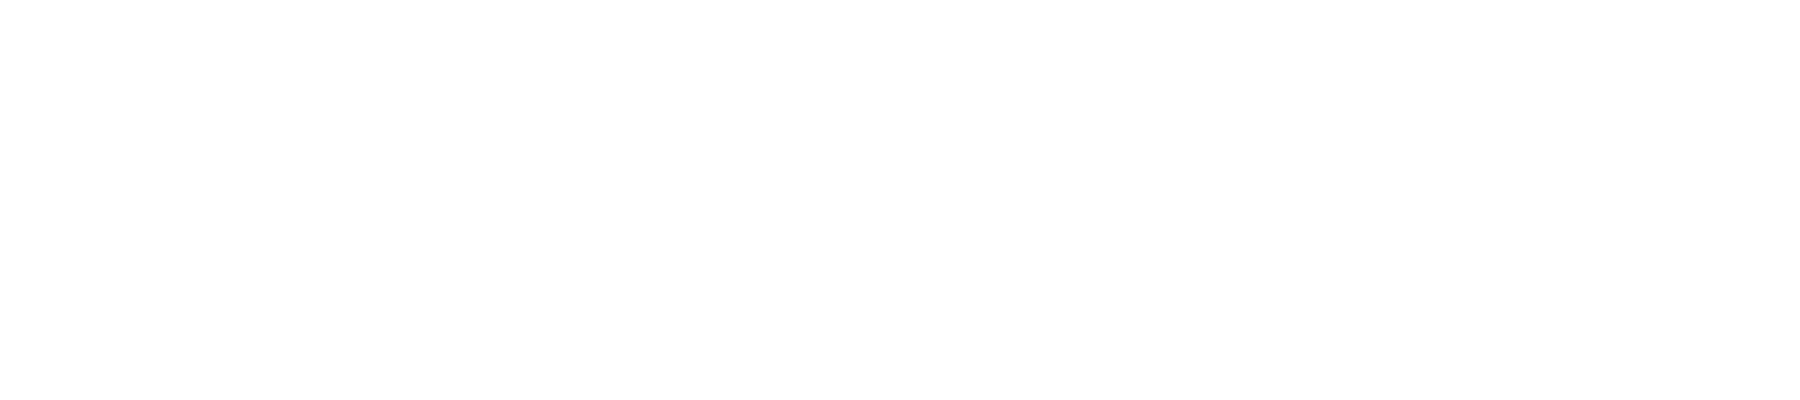 FLAKE CUP 2024-2025  CHAMPIONSHIP 2025.1.18【SAT】 イオンモール幕張新都心(チャンピオンシップ)